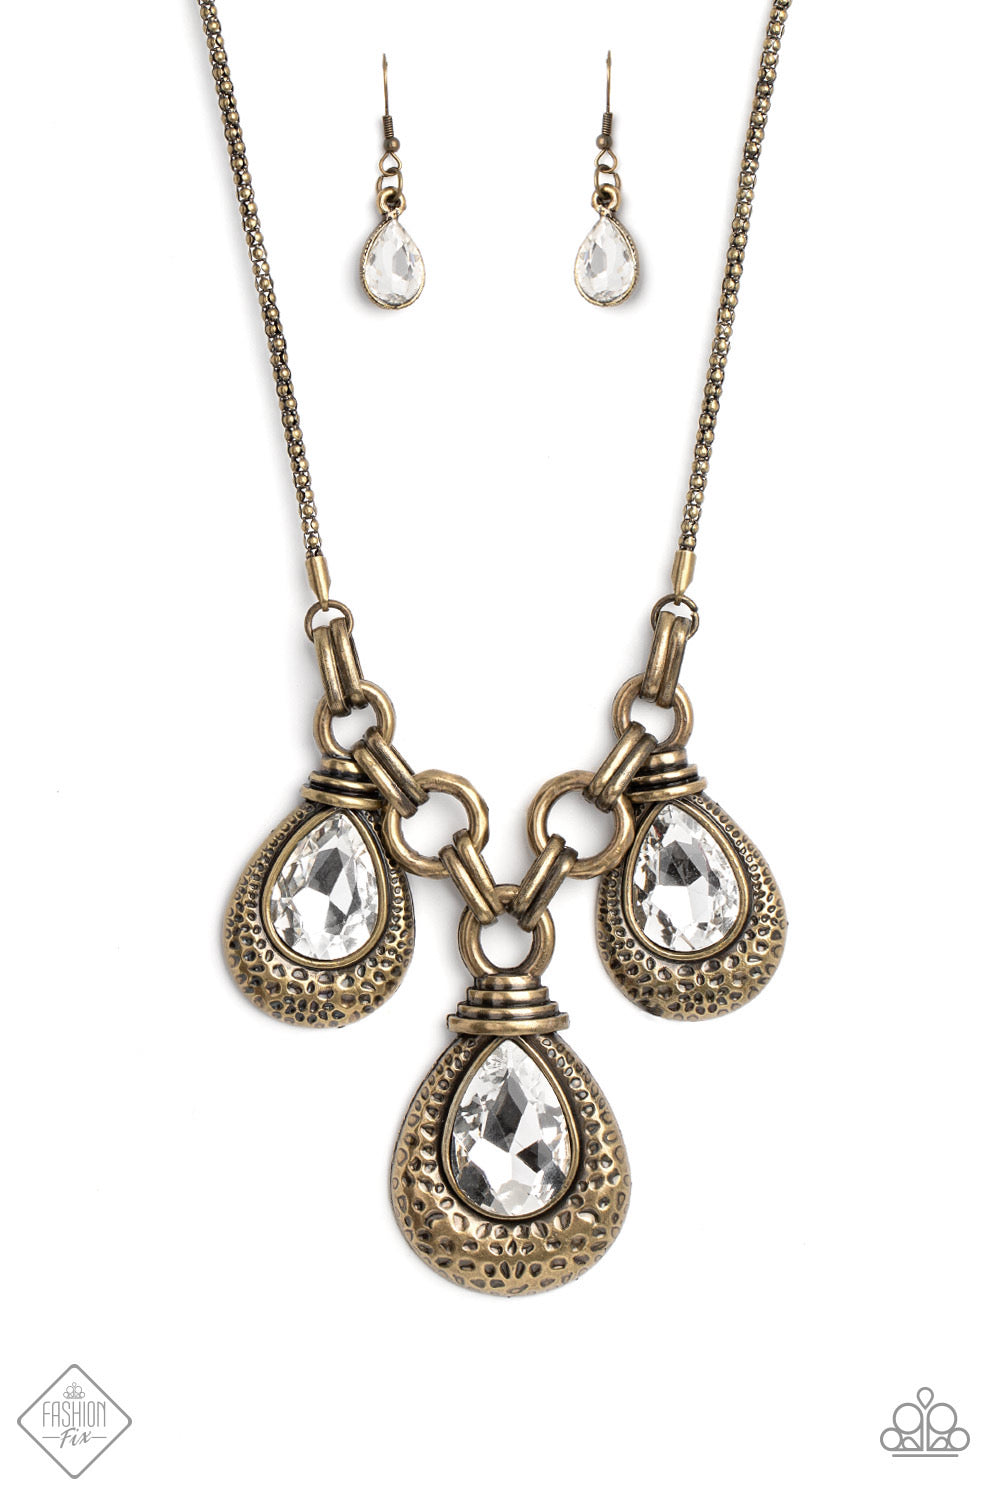 Catwalk Queen - Brass Necklace - Paparazzi Accessories – Bedazzle Me Pretty  Mobile Fashion Boutique